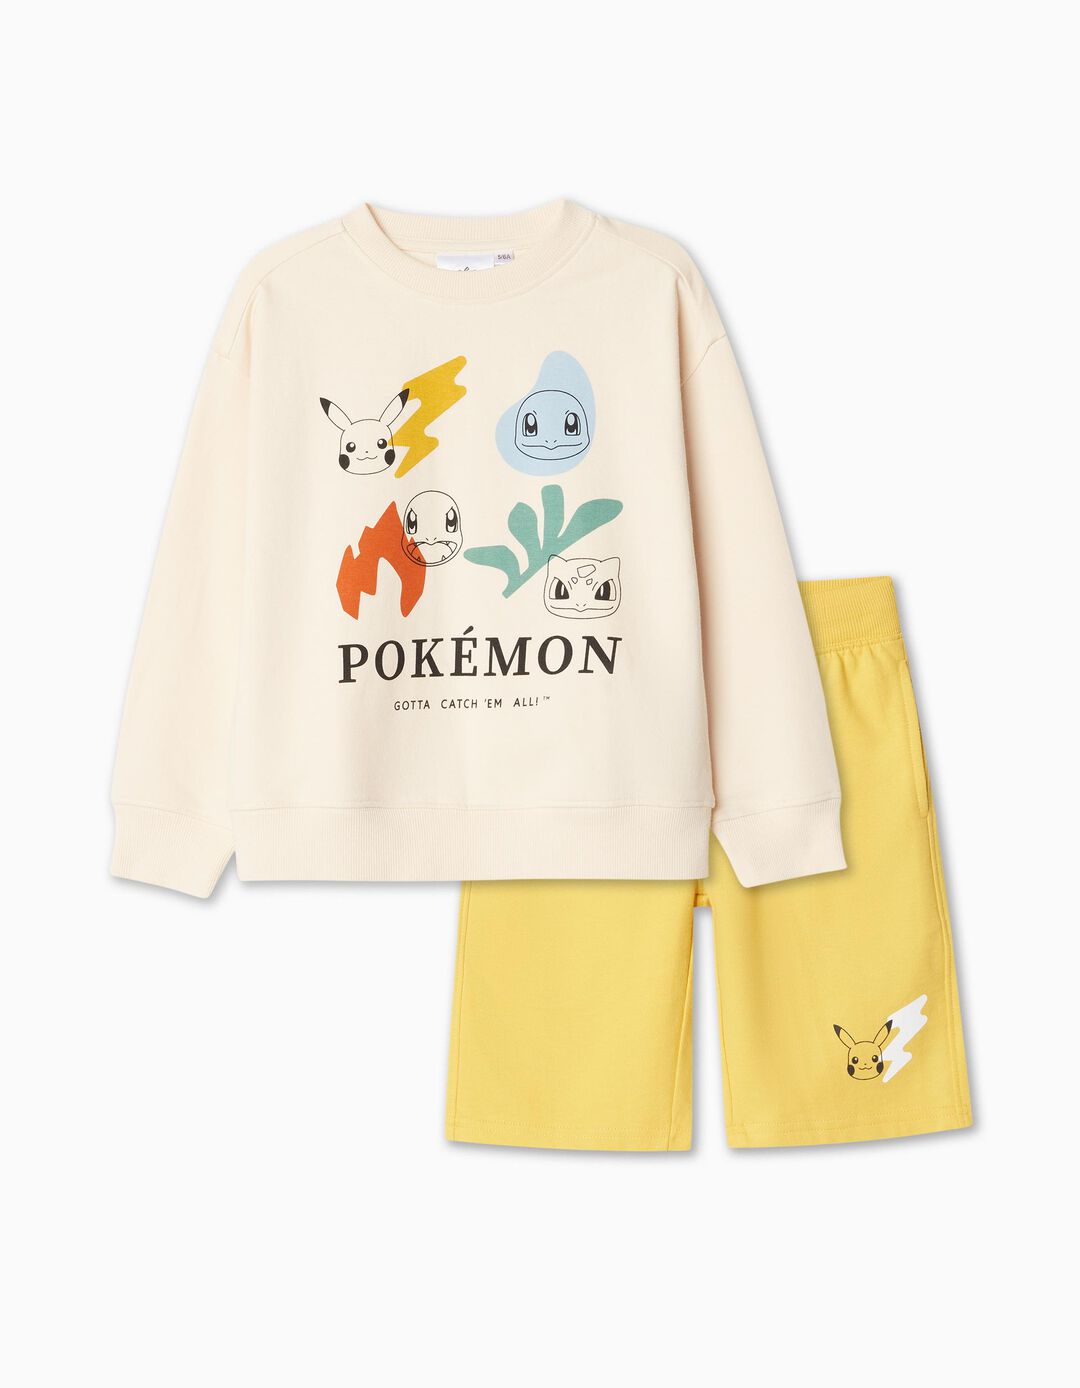 Conjunto Sweatshirt + Calções 'Pokémon', Menino, Multicor